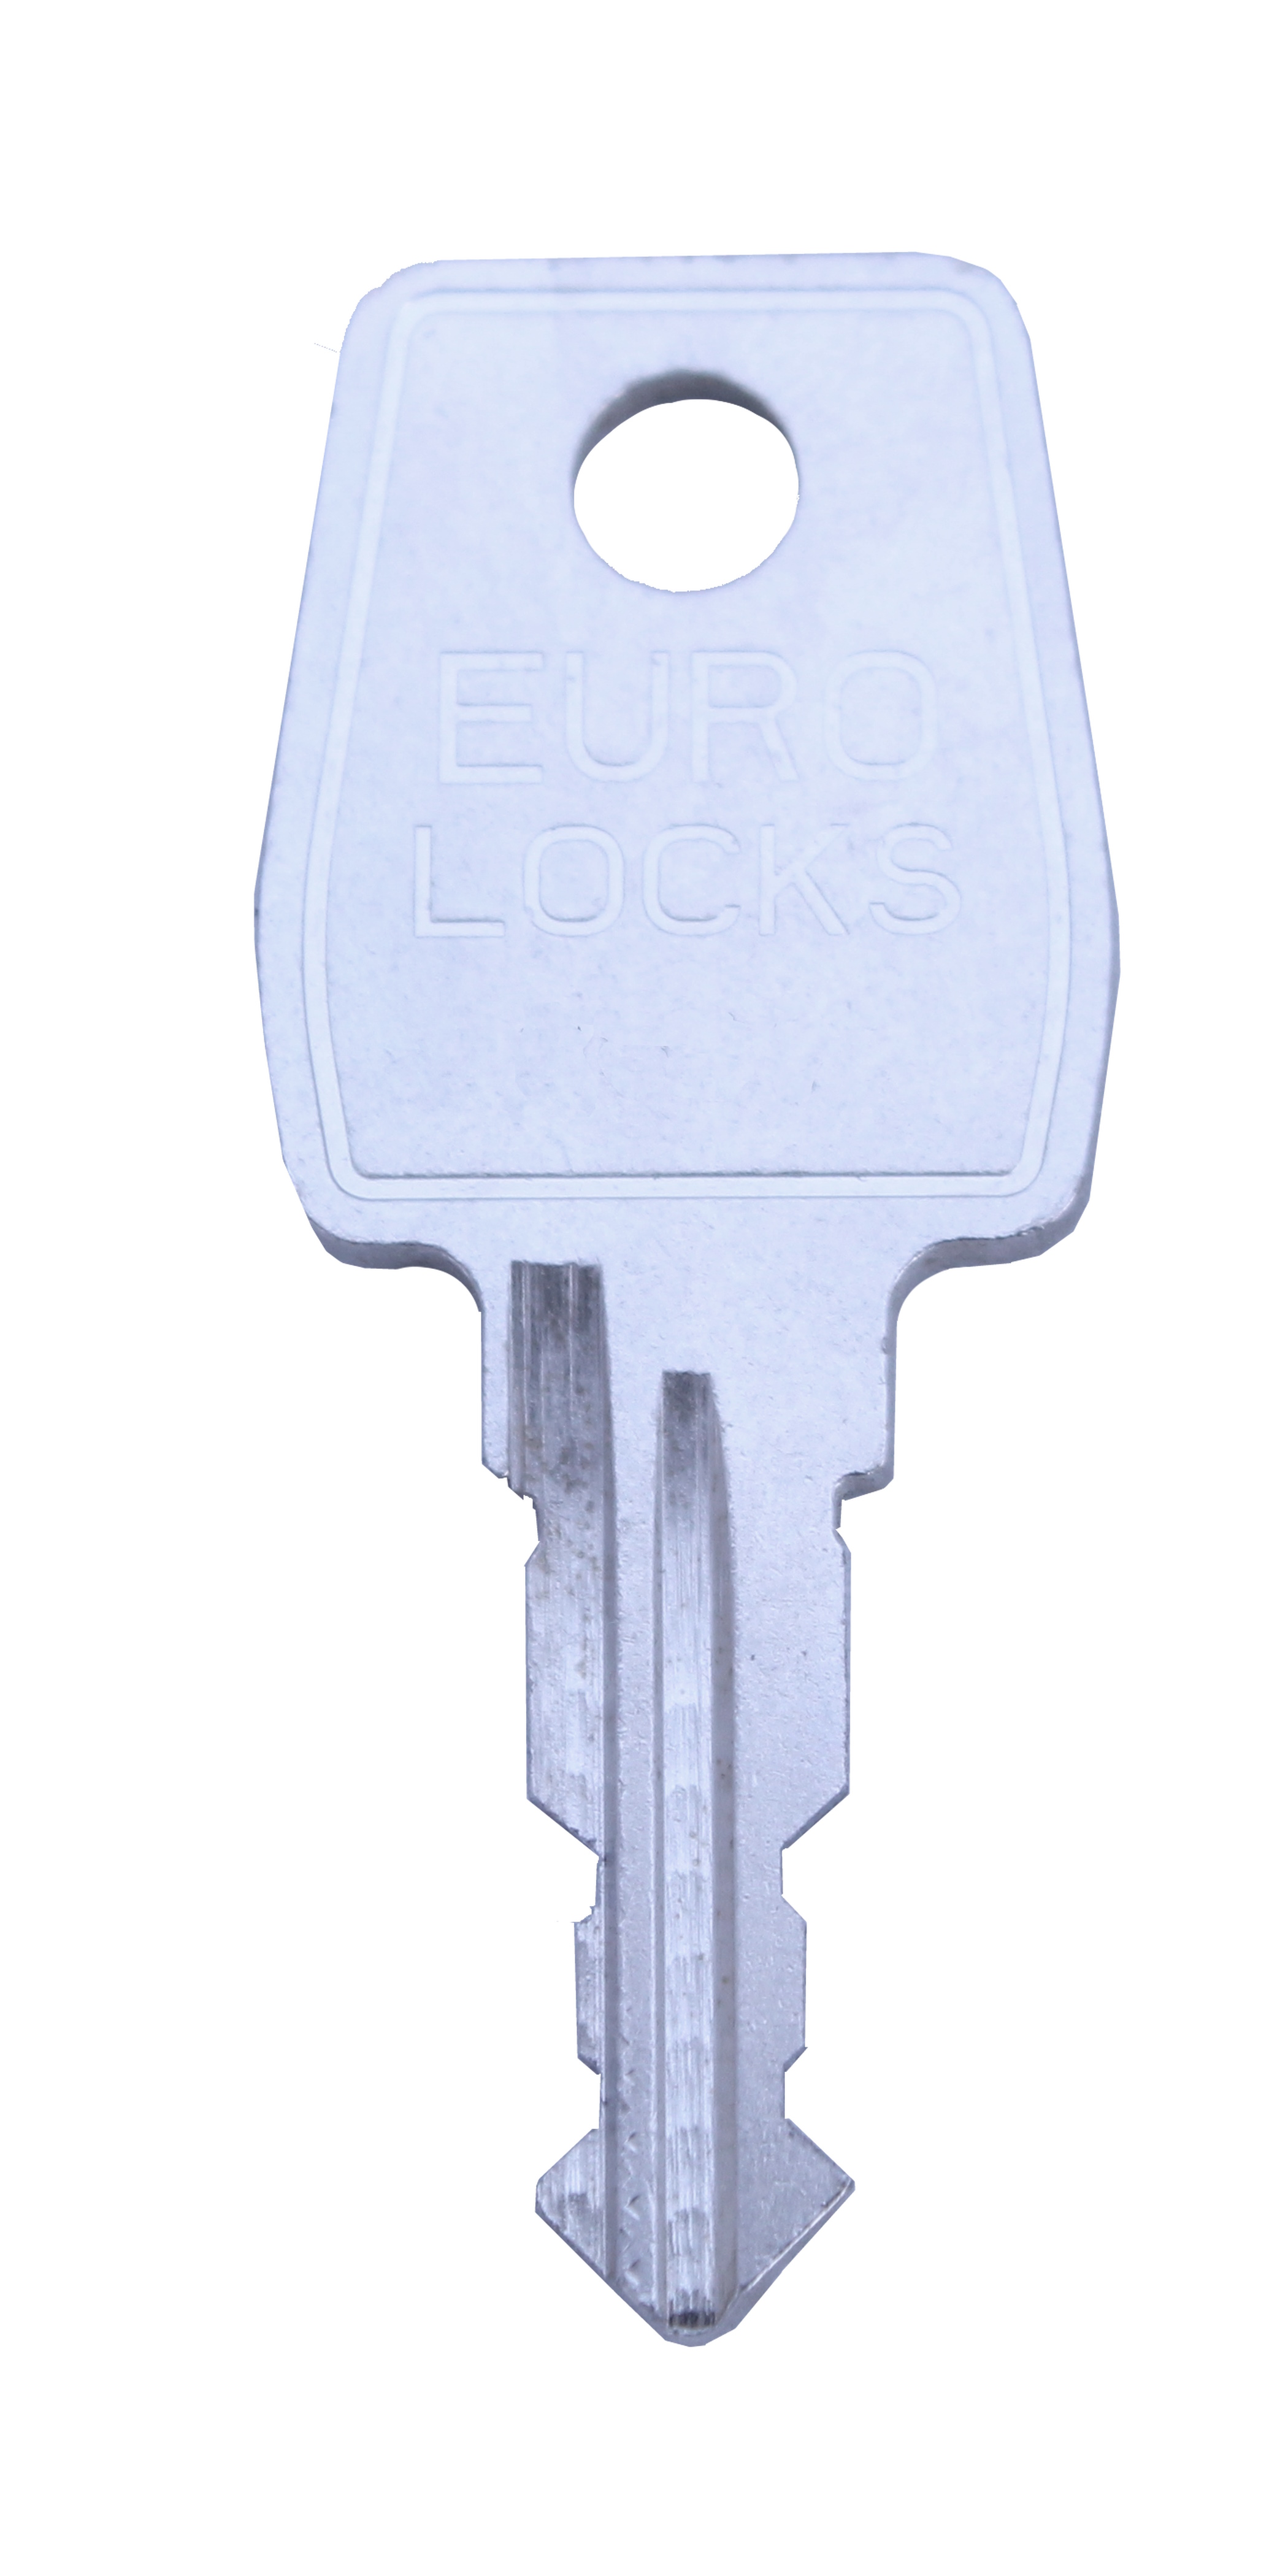 EUROLOCKS Schüssel - SK 9001 - 9500